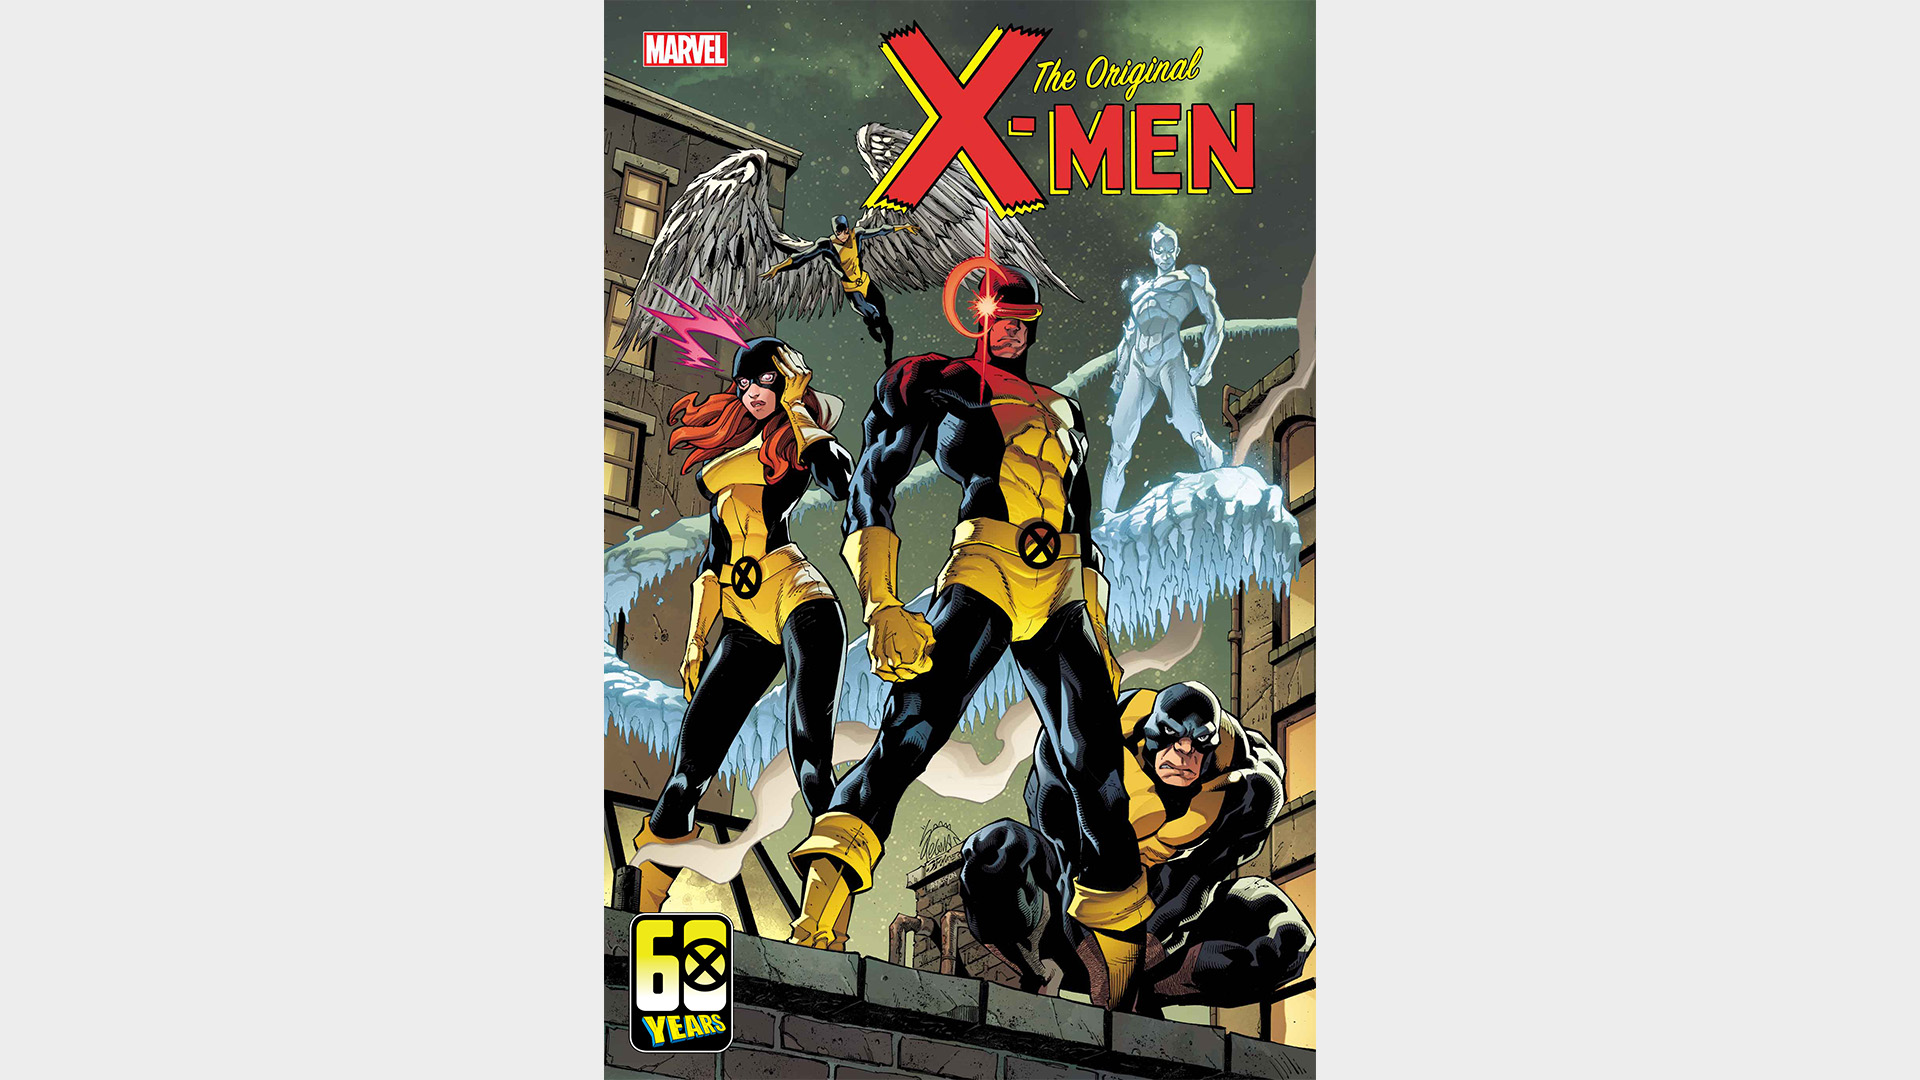 ORIGINAL X-MEN #1